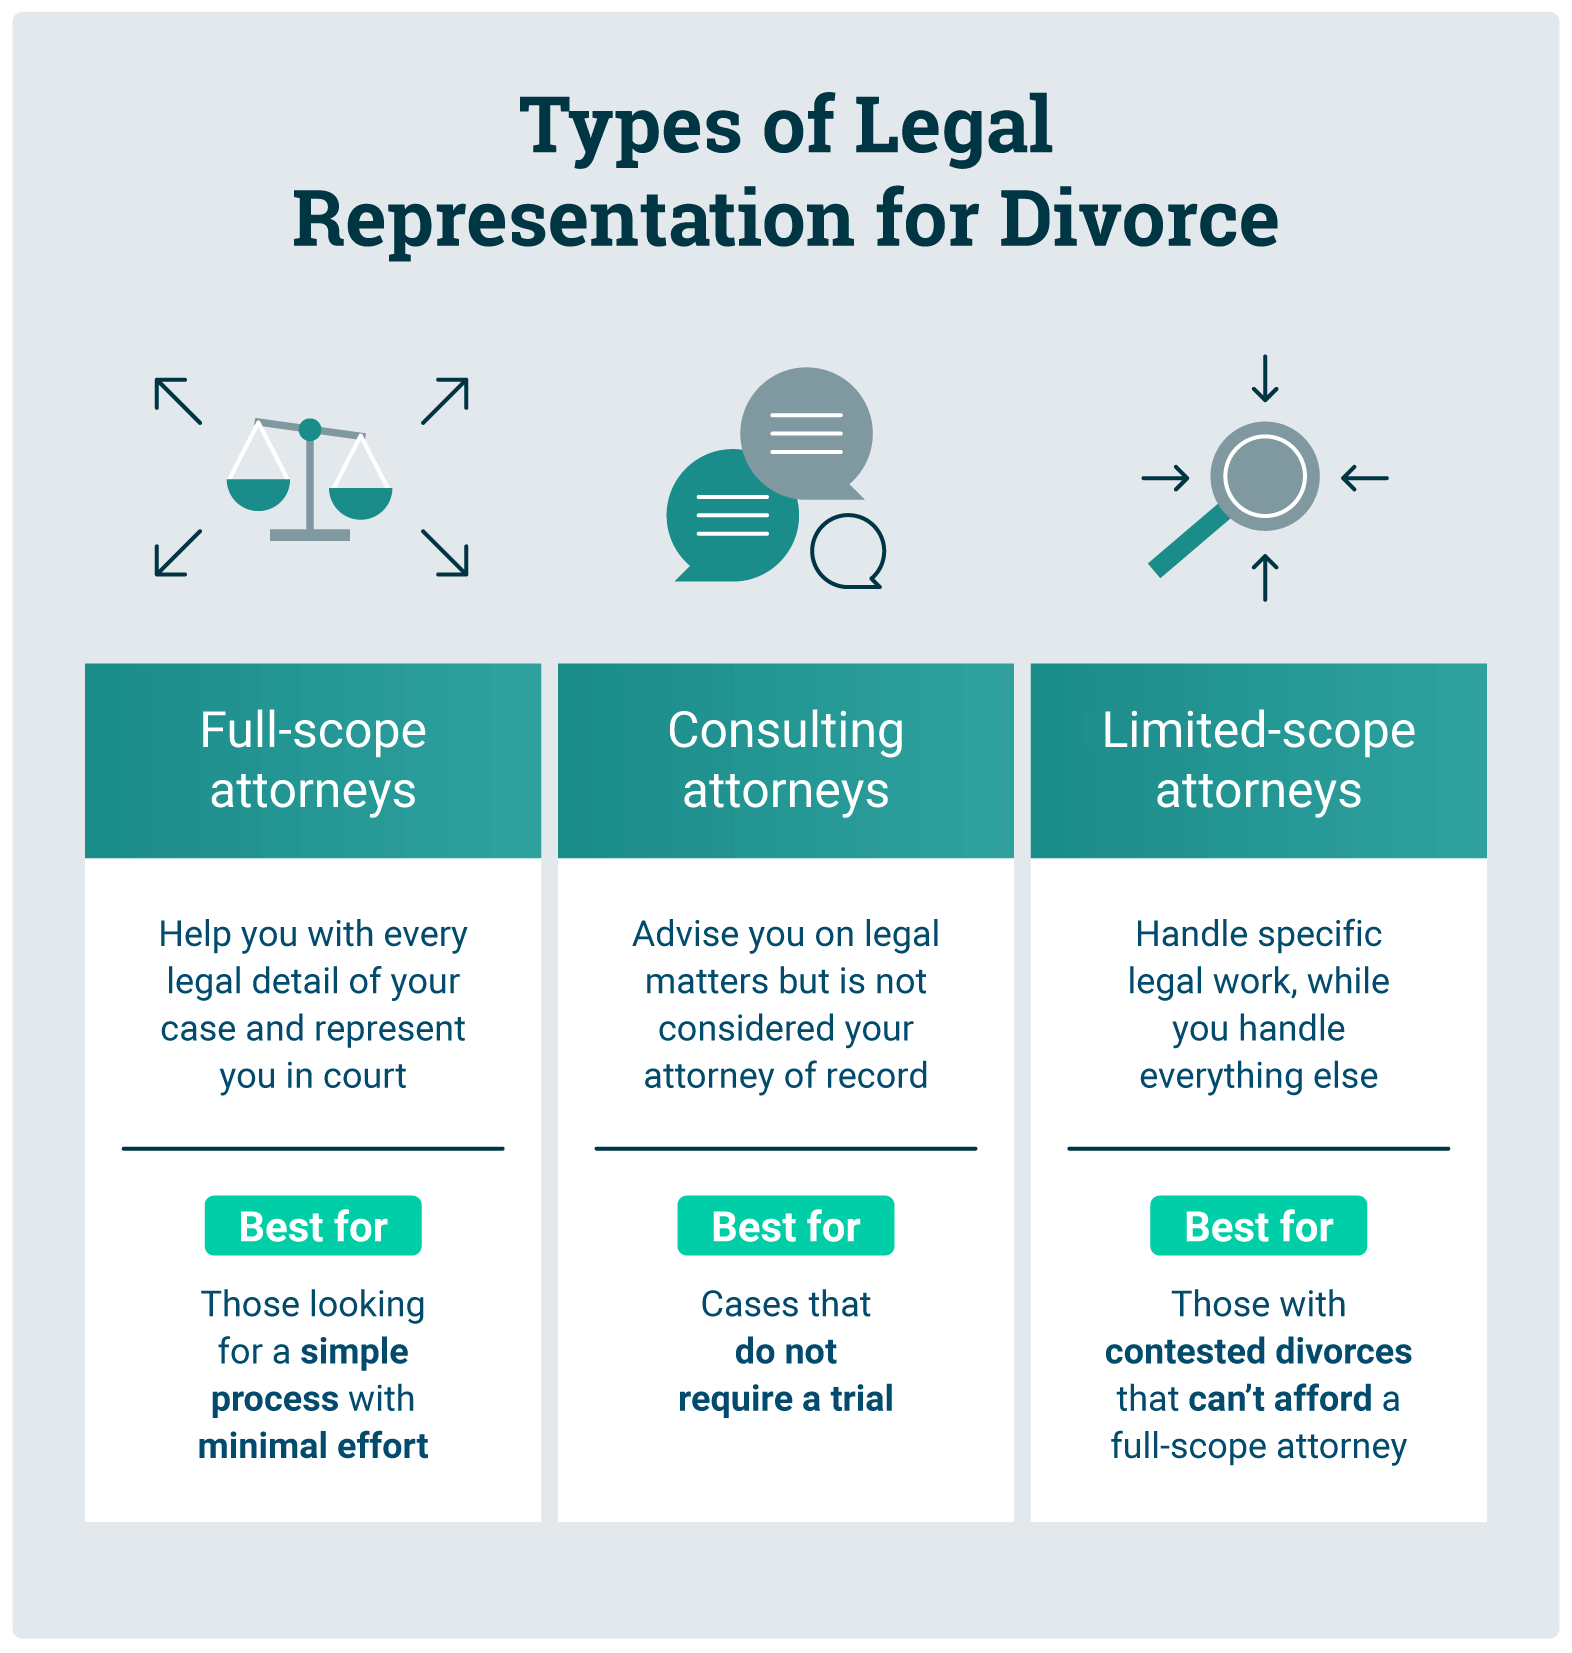 Types of Legal Representation for Divorce